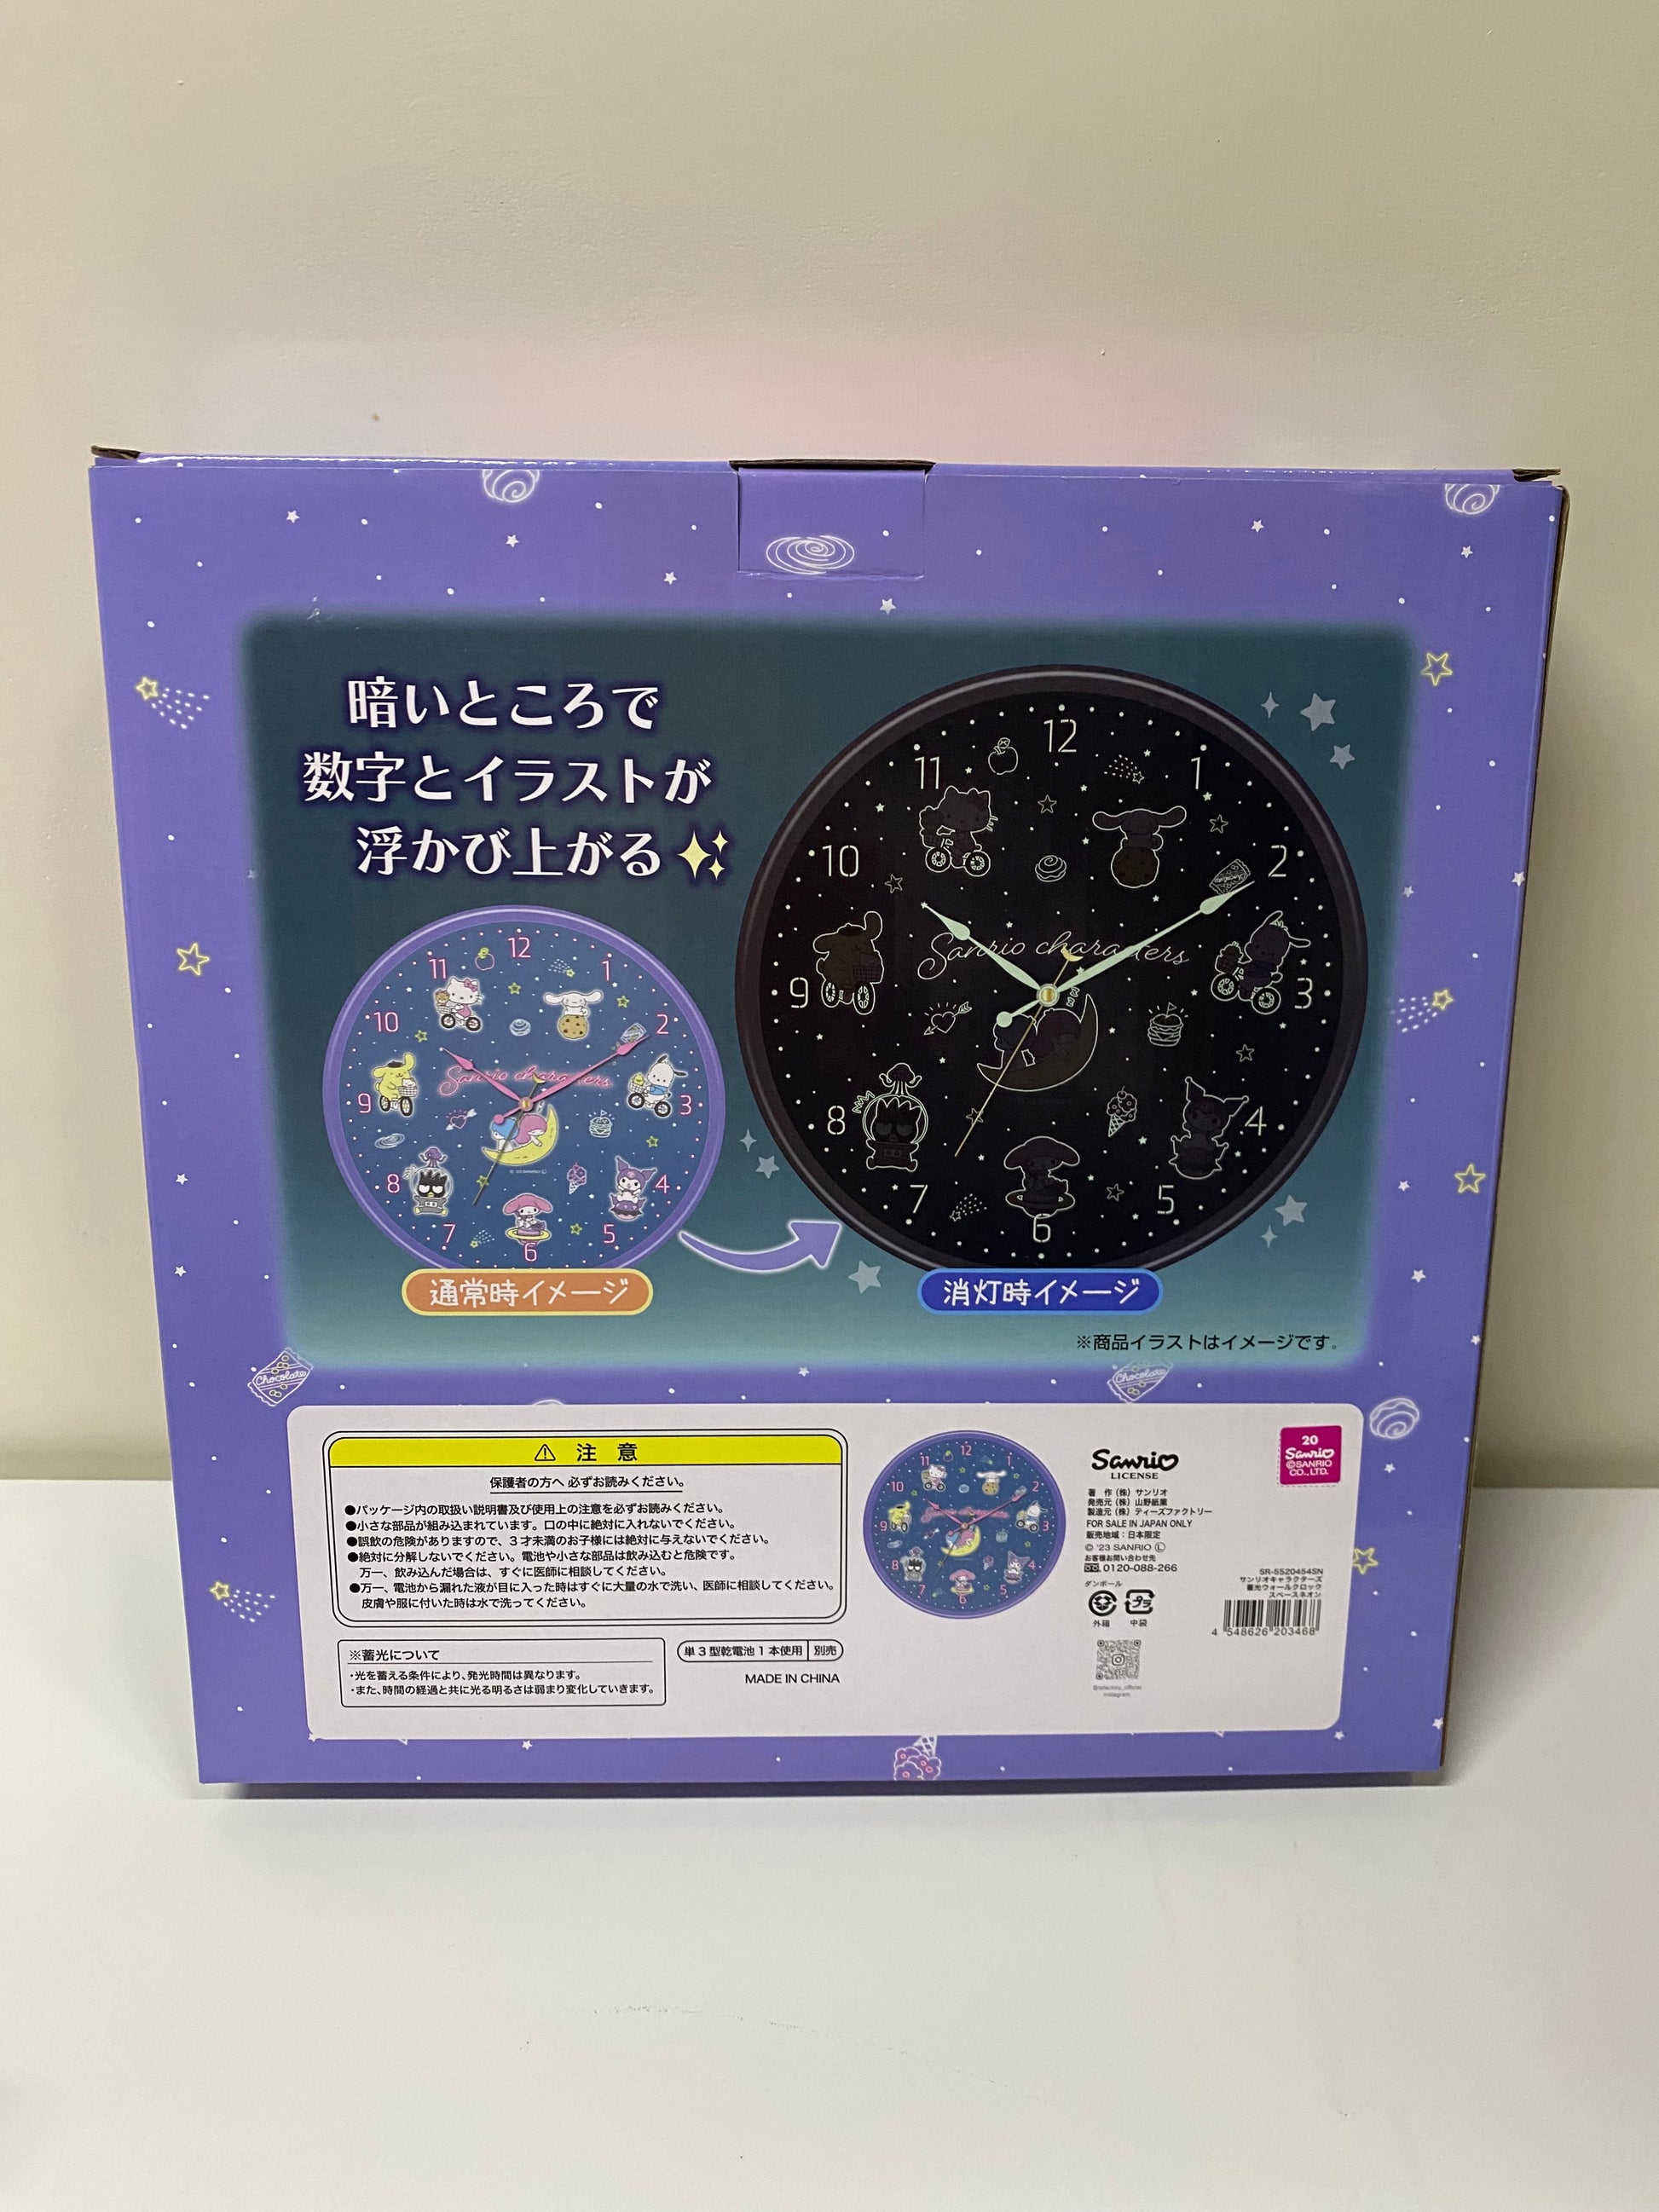 Japan Sanrio GID Wall Clock | Sweet Dream Sanrio Characters Space UFO Version - Kawaii Bedroom Sitting Room Decoration 